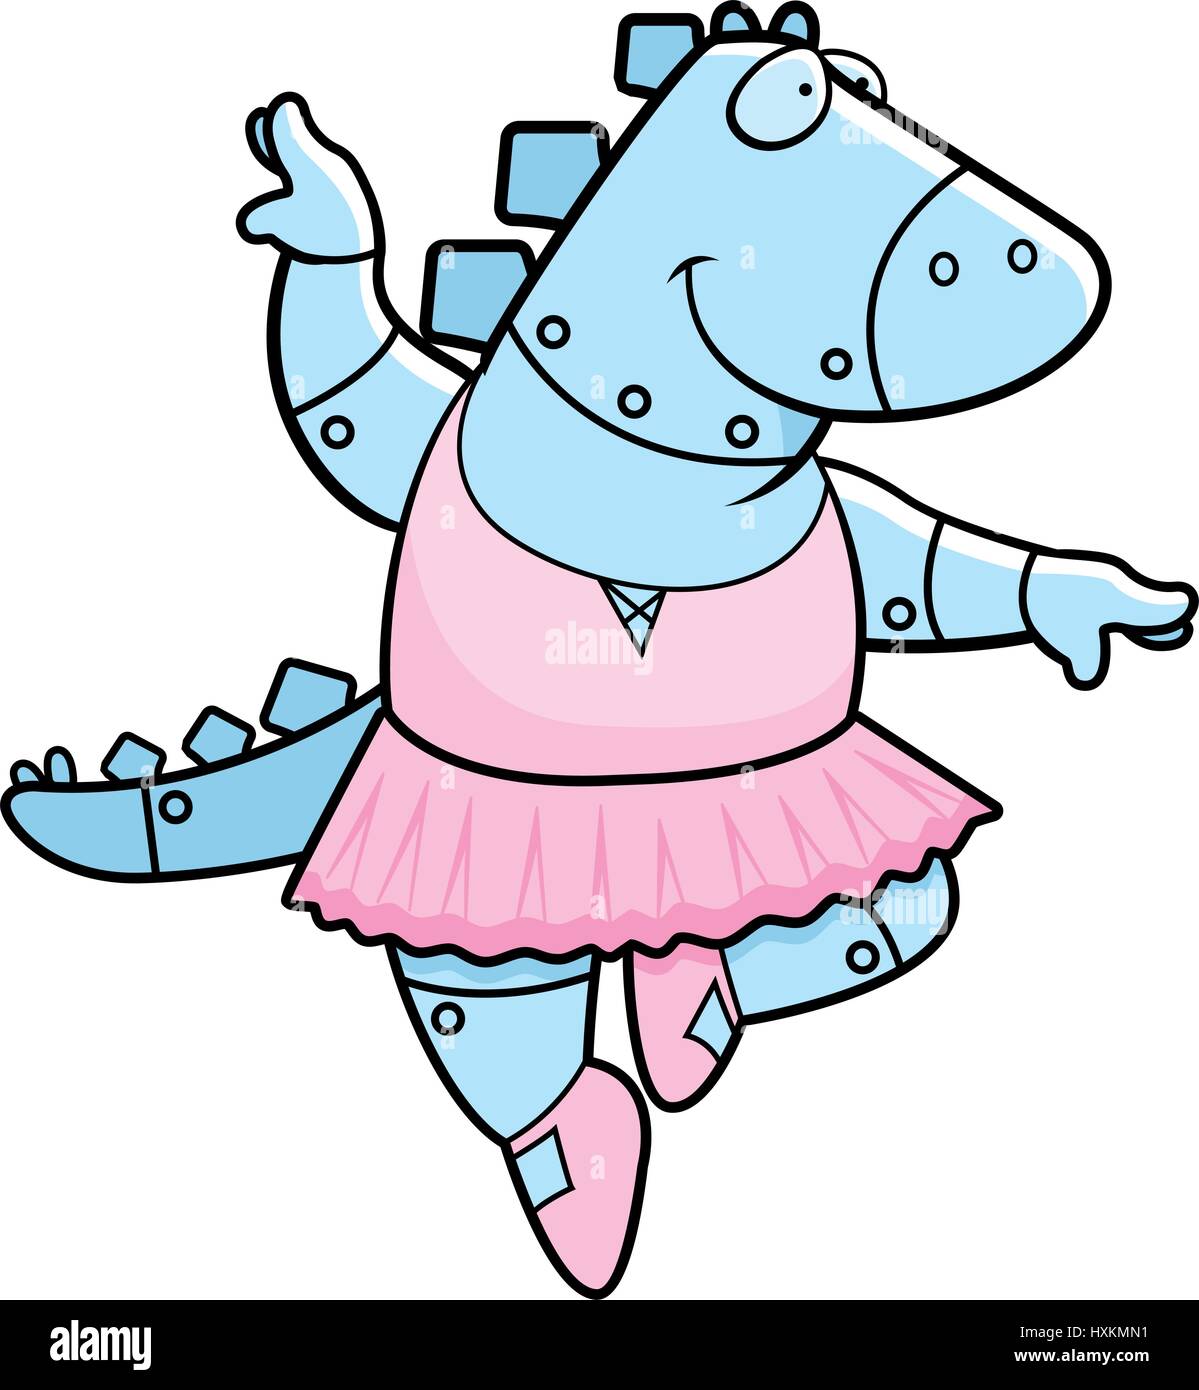 A cartoon illustration of a robot stegosaurus dinosaur ballerina dancing  Stock Vector Image & Art - Alamy